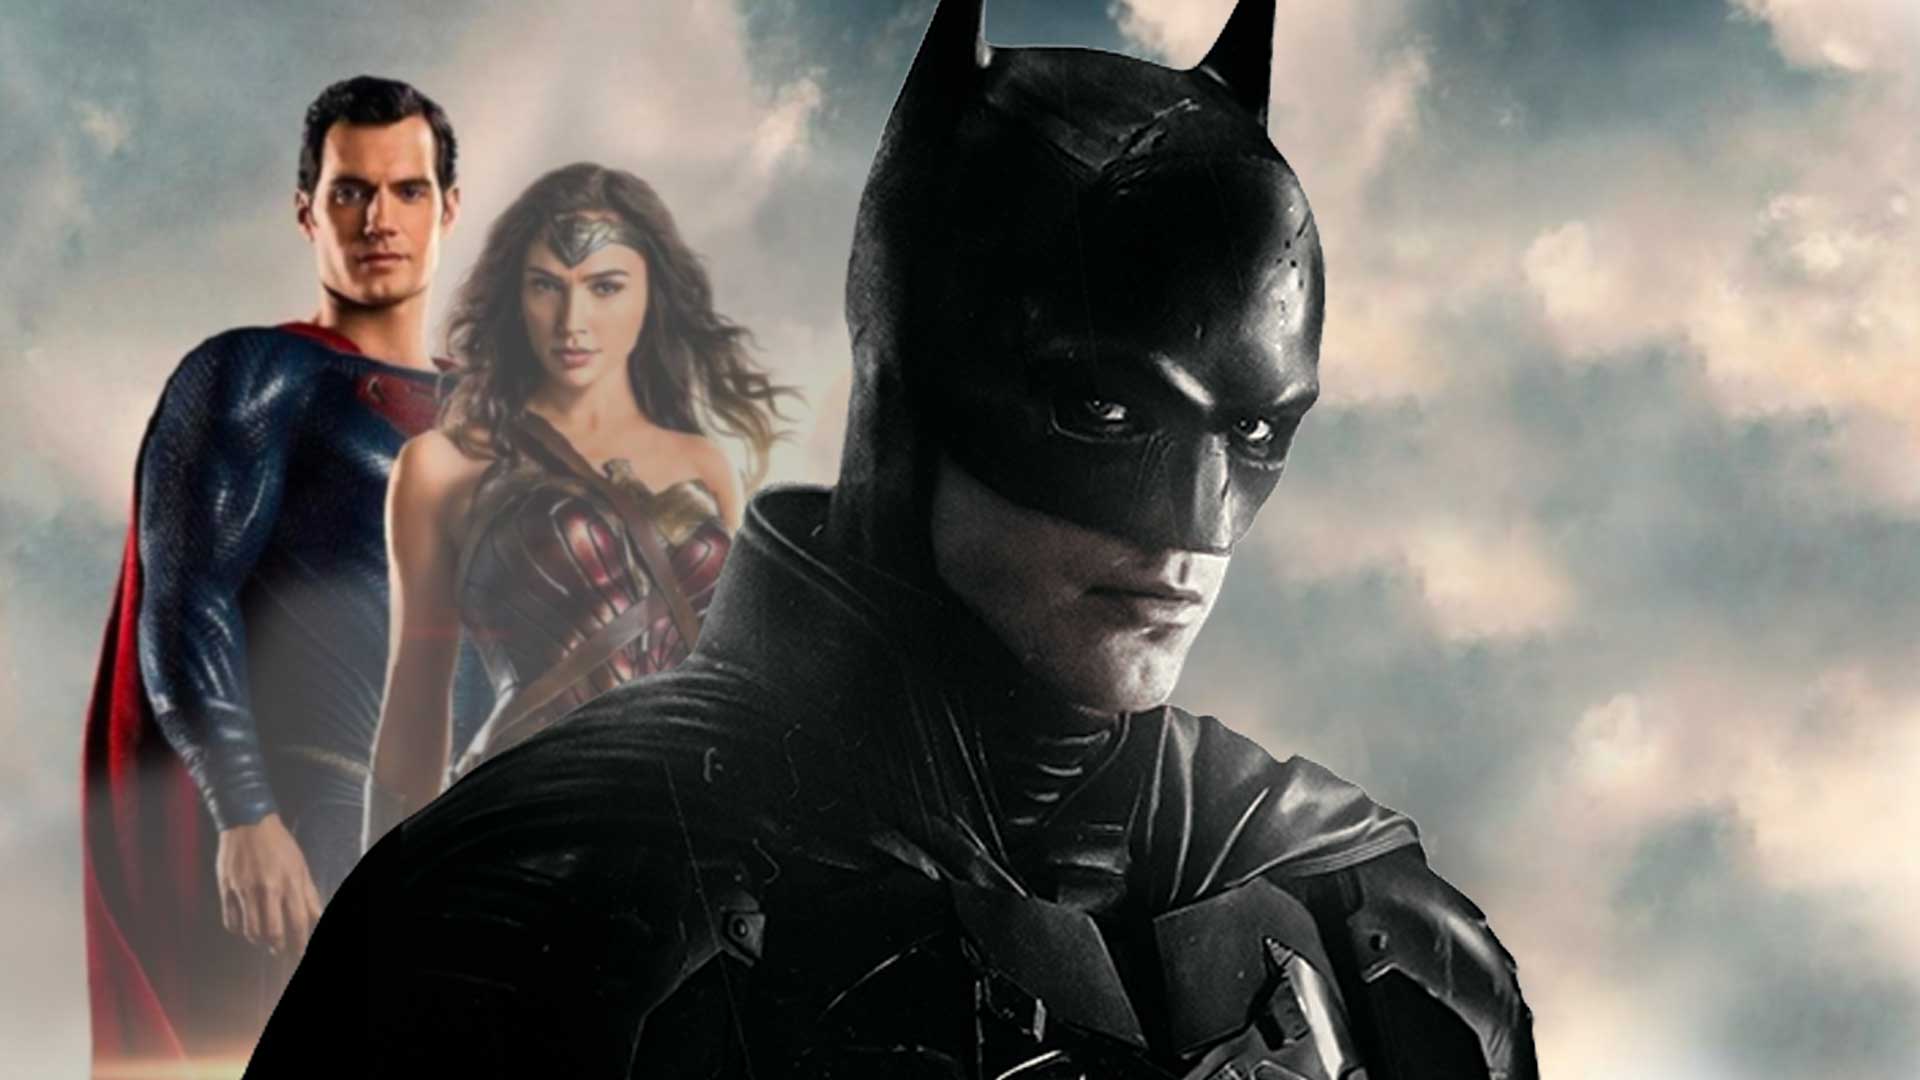 The Batman Director's Cut: Superman & Wonder Woman In 4 Hour Movie